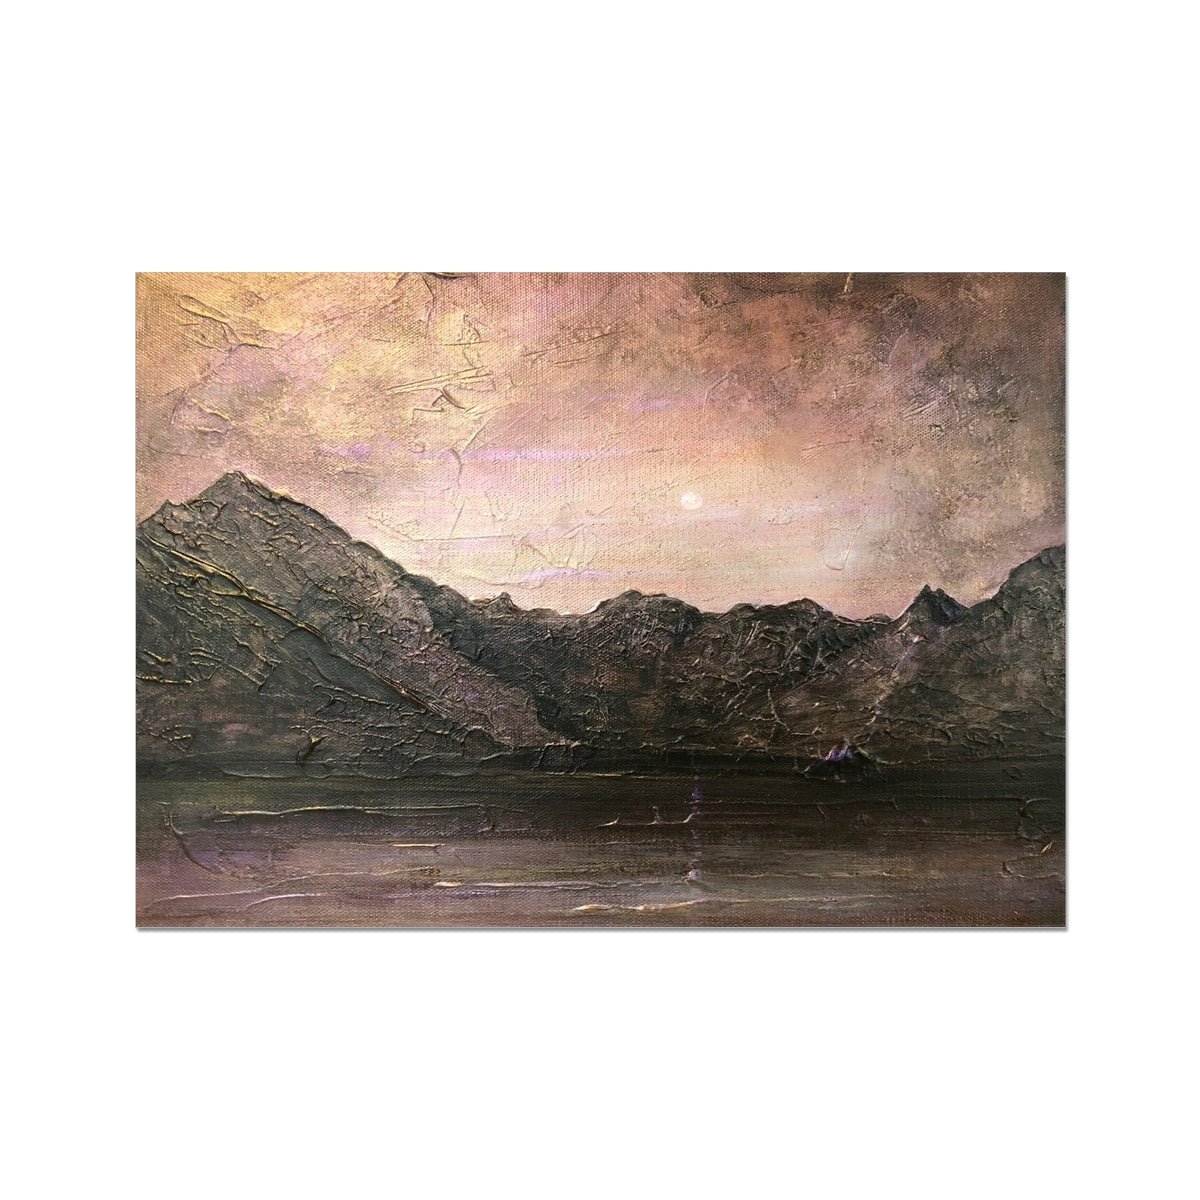 Dubh Ridge Moonlight Skye Painting | Fine Art Prints From Scotland-Unframed Prints-Skye Art Gallery-A2 Landscape-Paintings, Prints, Homeware, Art Gifts From Scotland By Scottish Artist Kevin Hunter